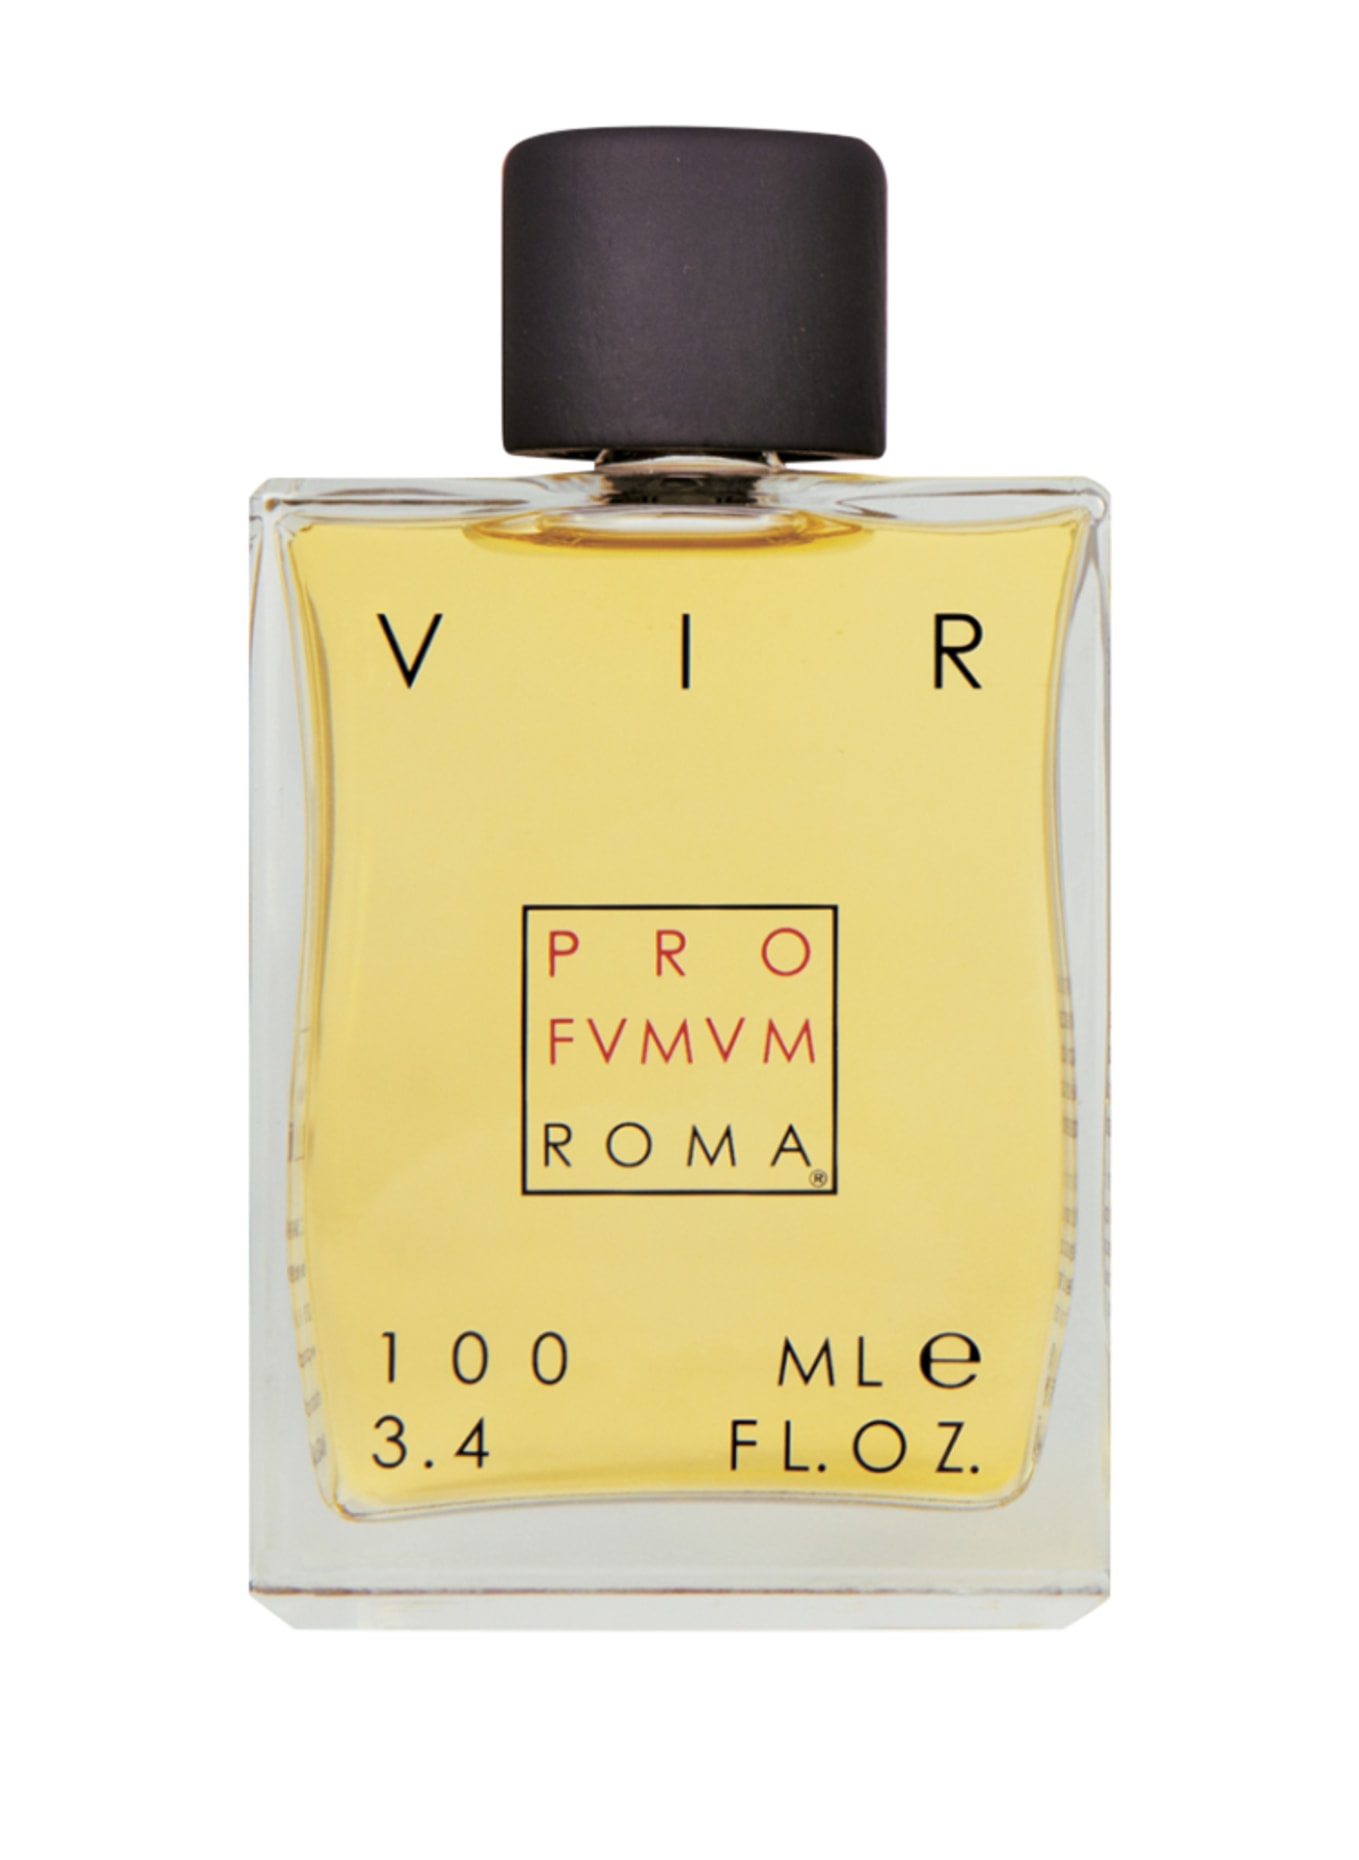 PRO FVMVM ROMA VIR (Bild 1)